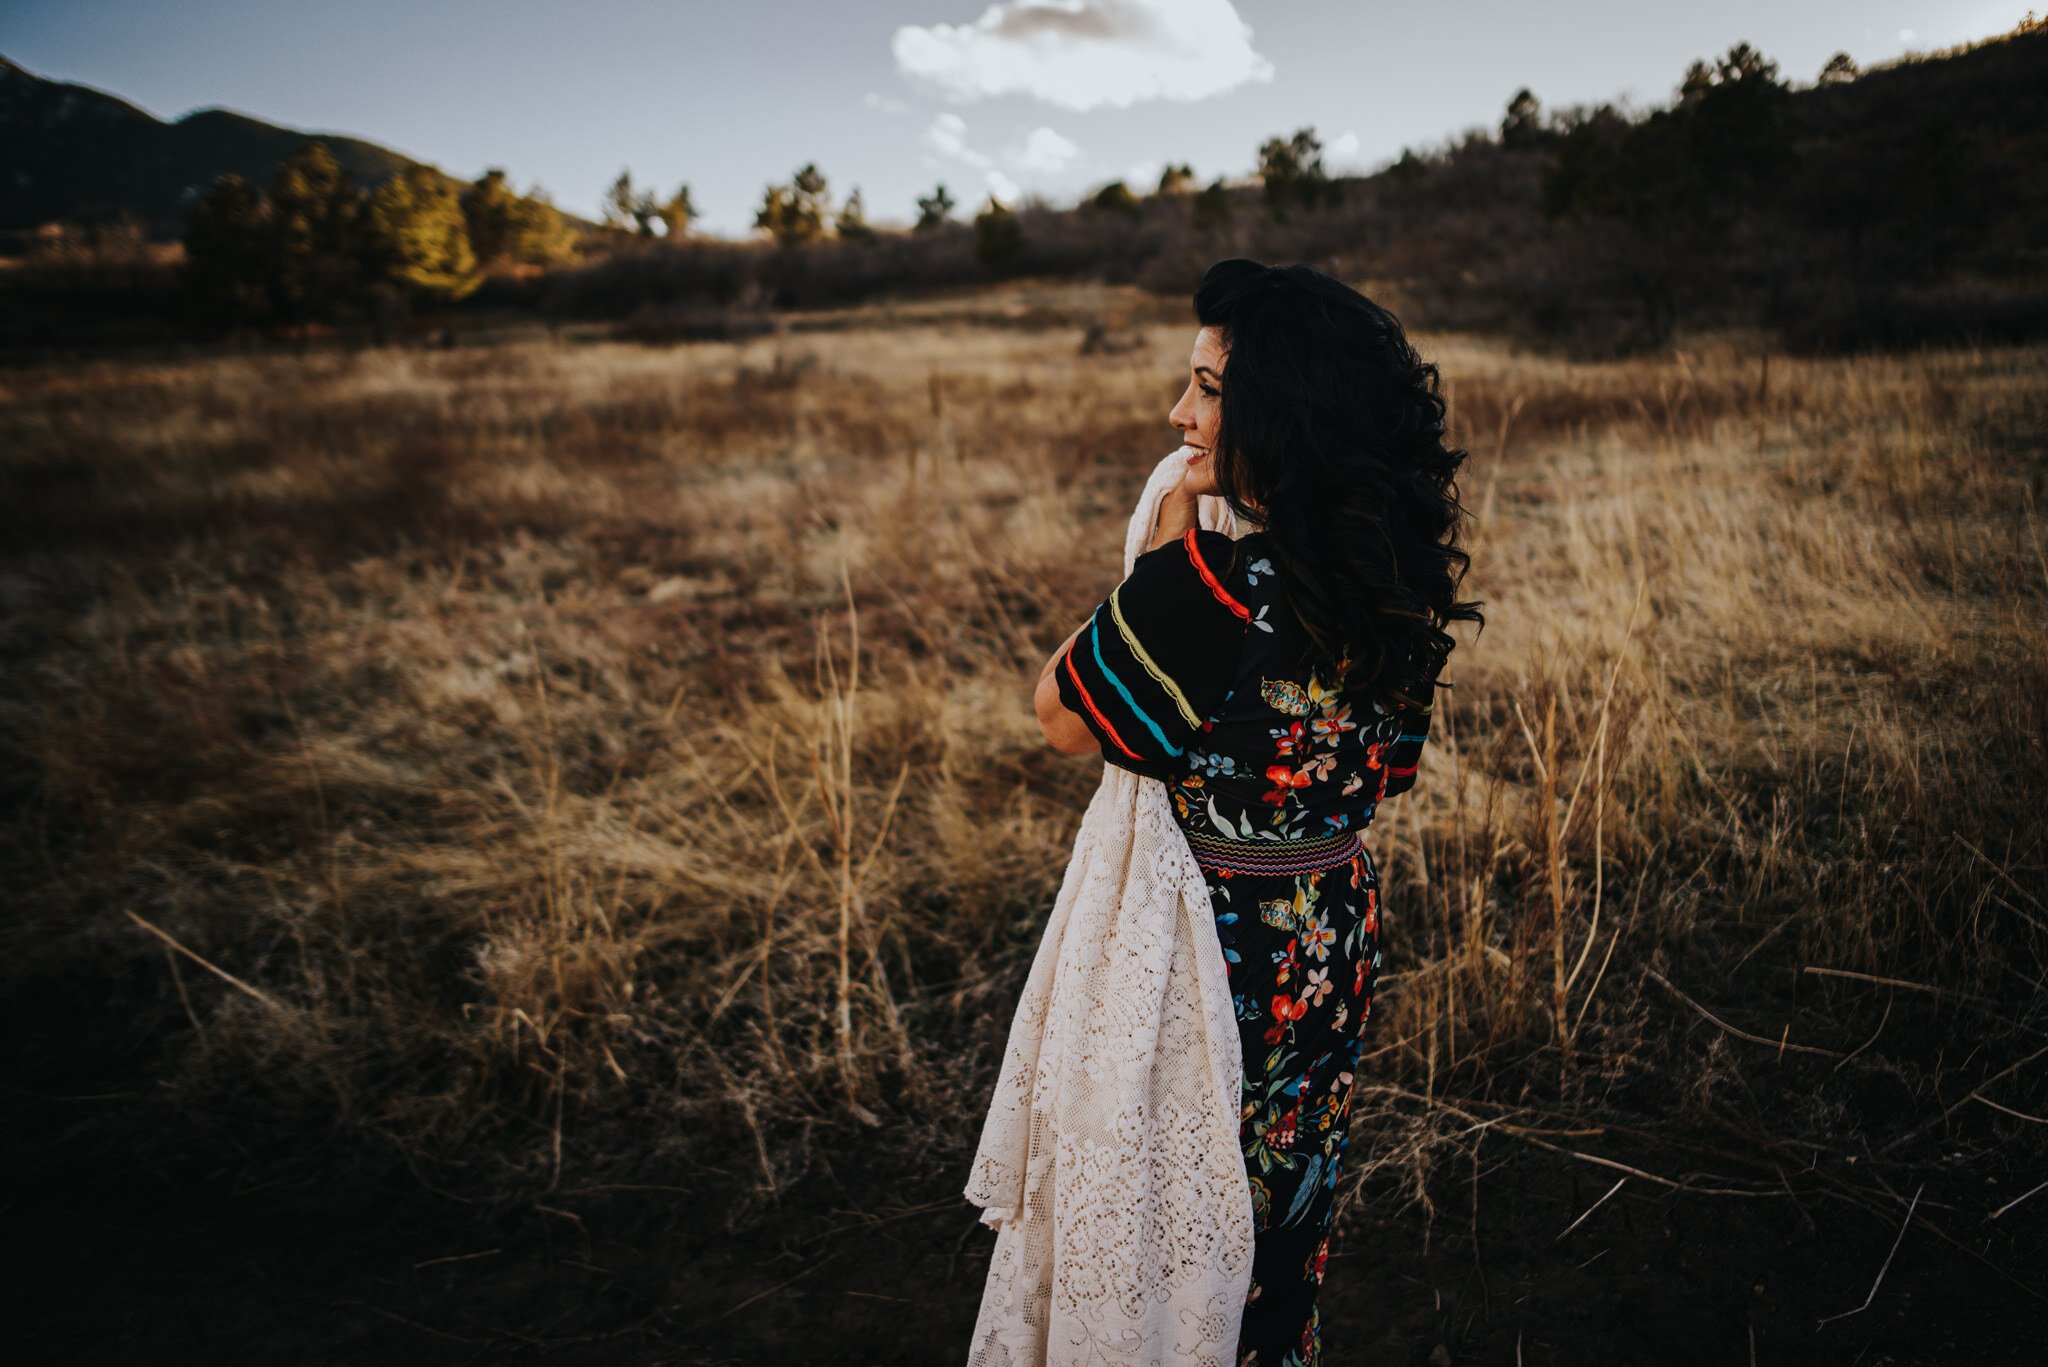 Celi+Turner+Headshots+Colorado+Springs+Colorado+Sunset+Mountains+Field+Woman+Wild+Prairie+Photography-04-2020.jpeg